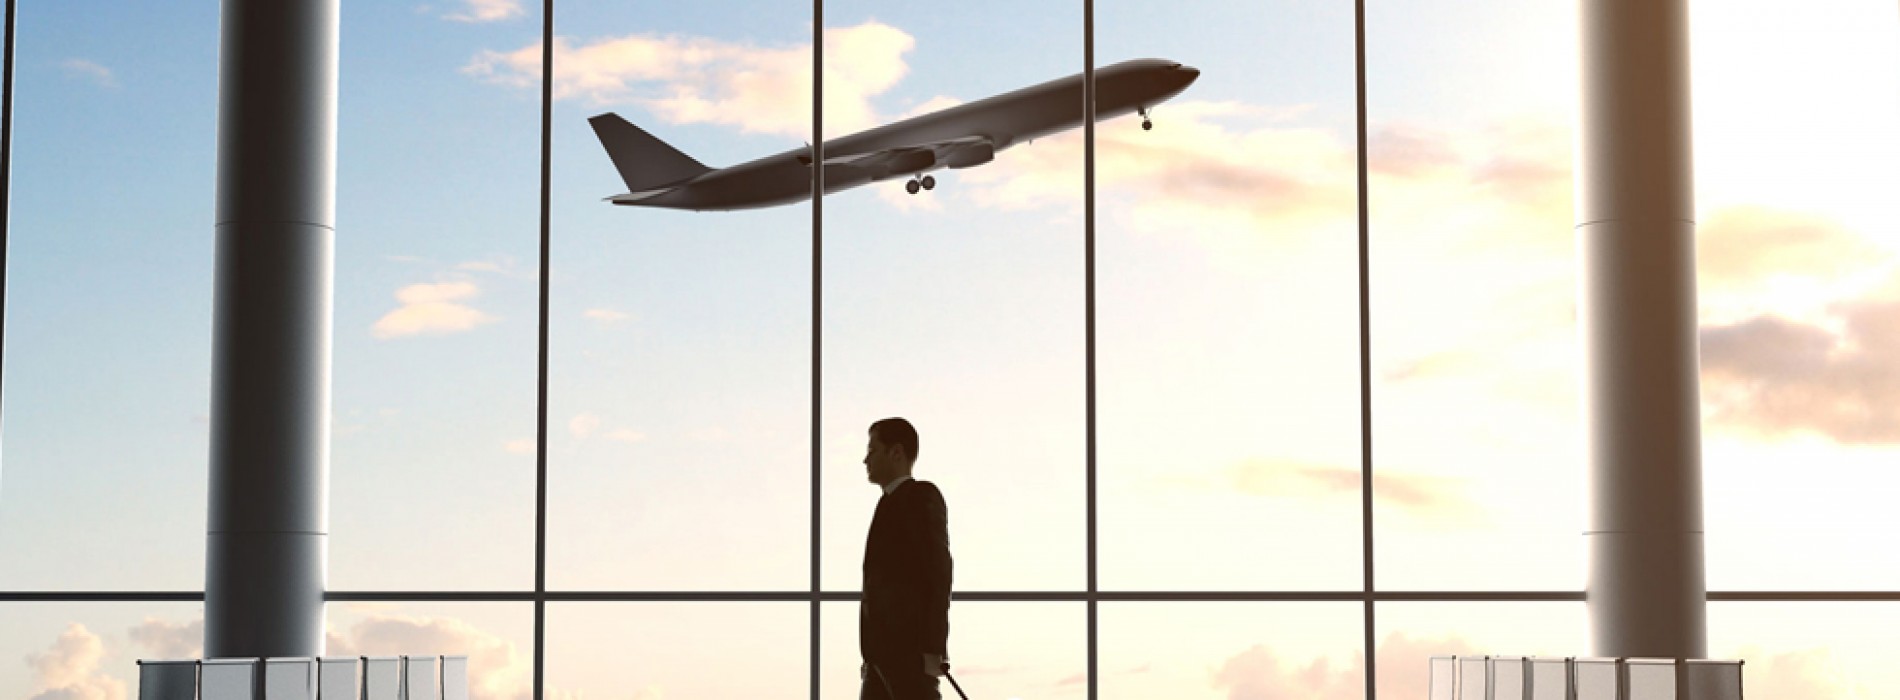 Low airport capacity worries aviation insiders